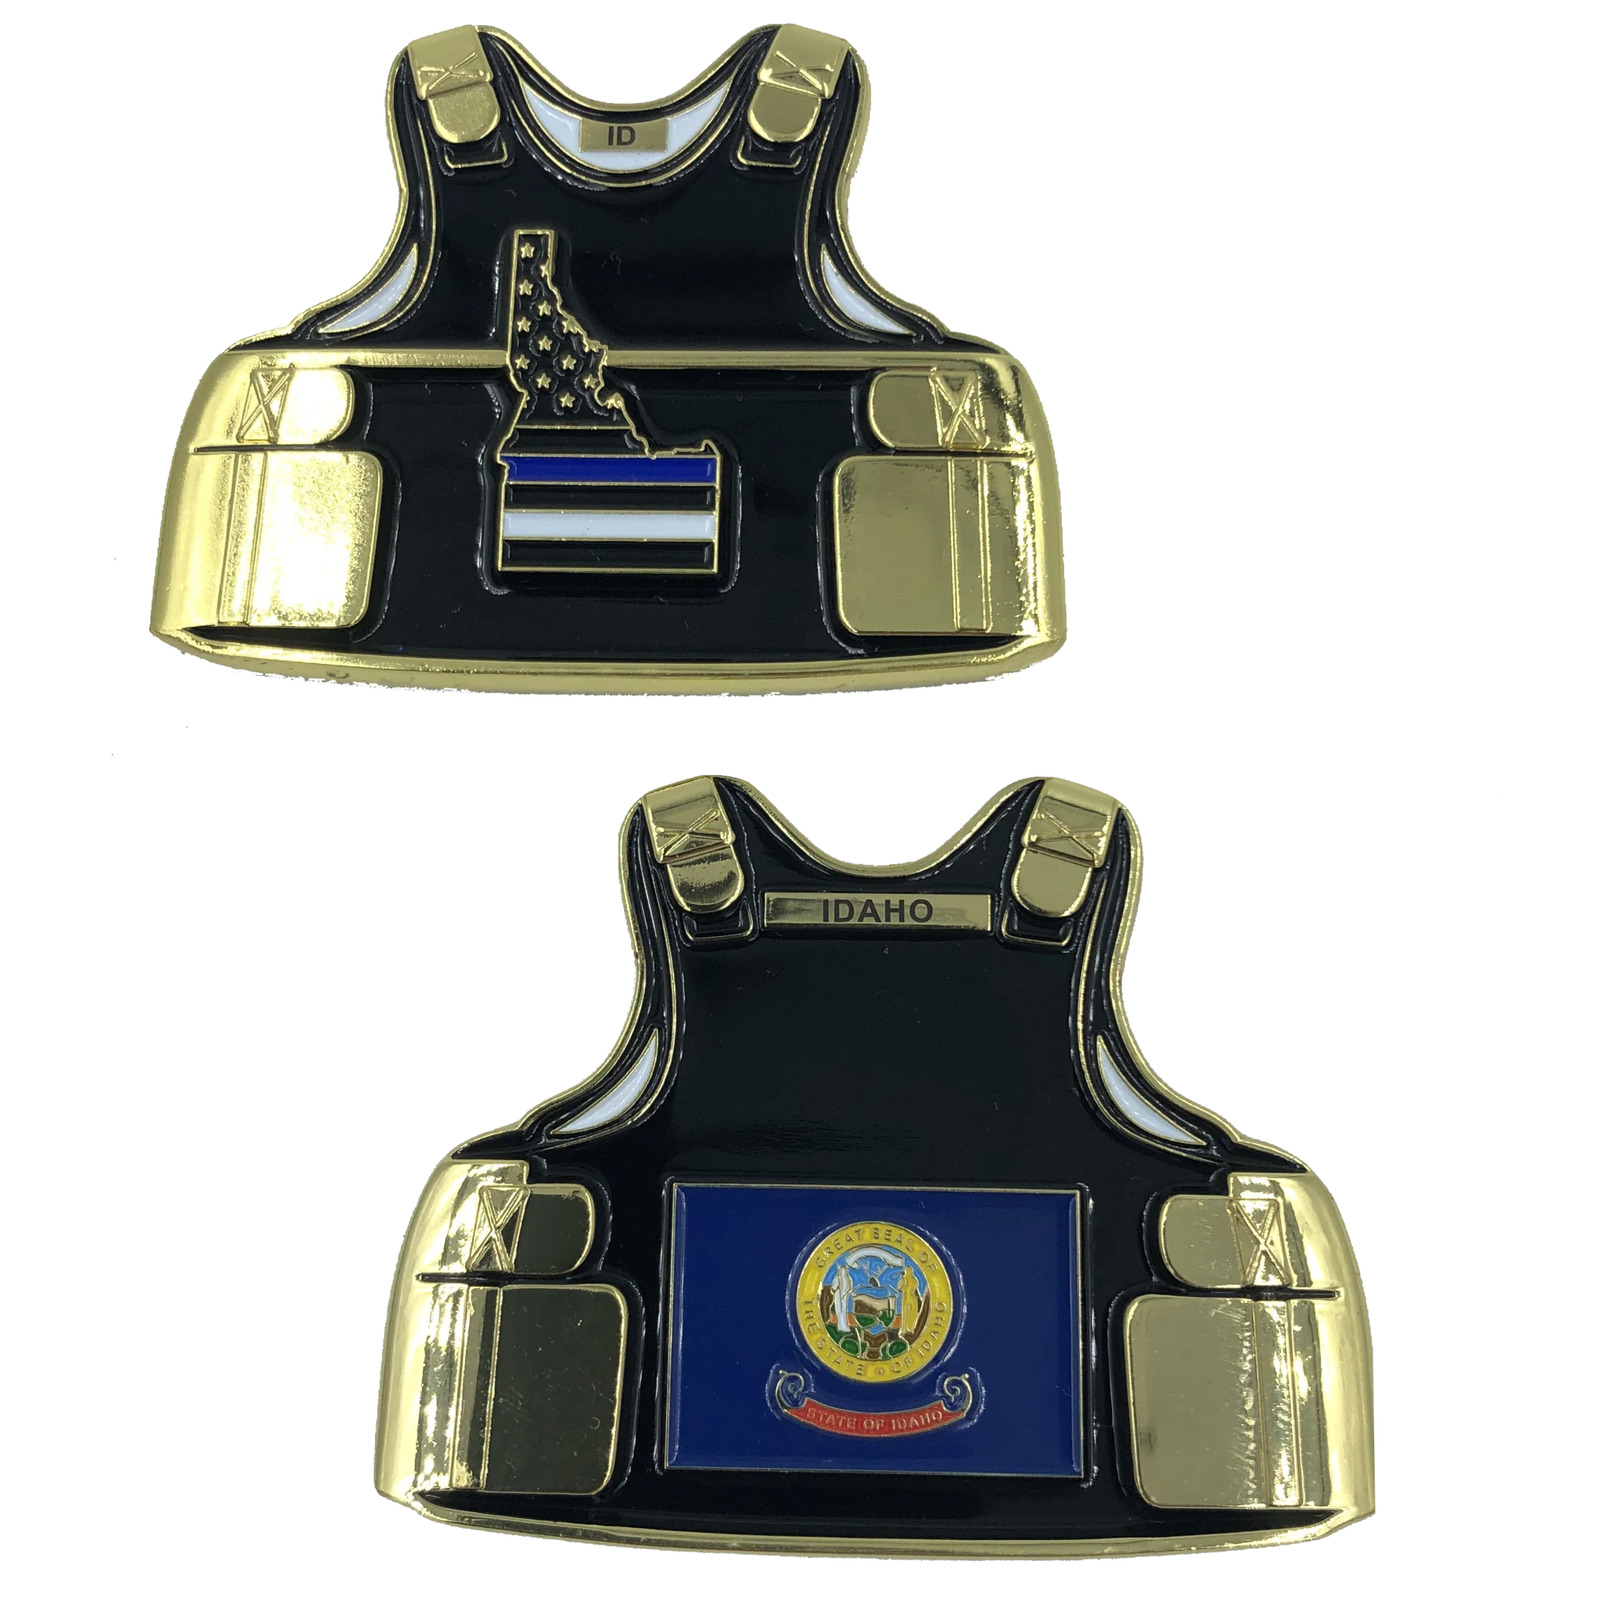 Idaho LEO Thin Blue Line Police Body Armor State Flag Challenge Coins C-011